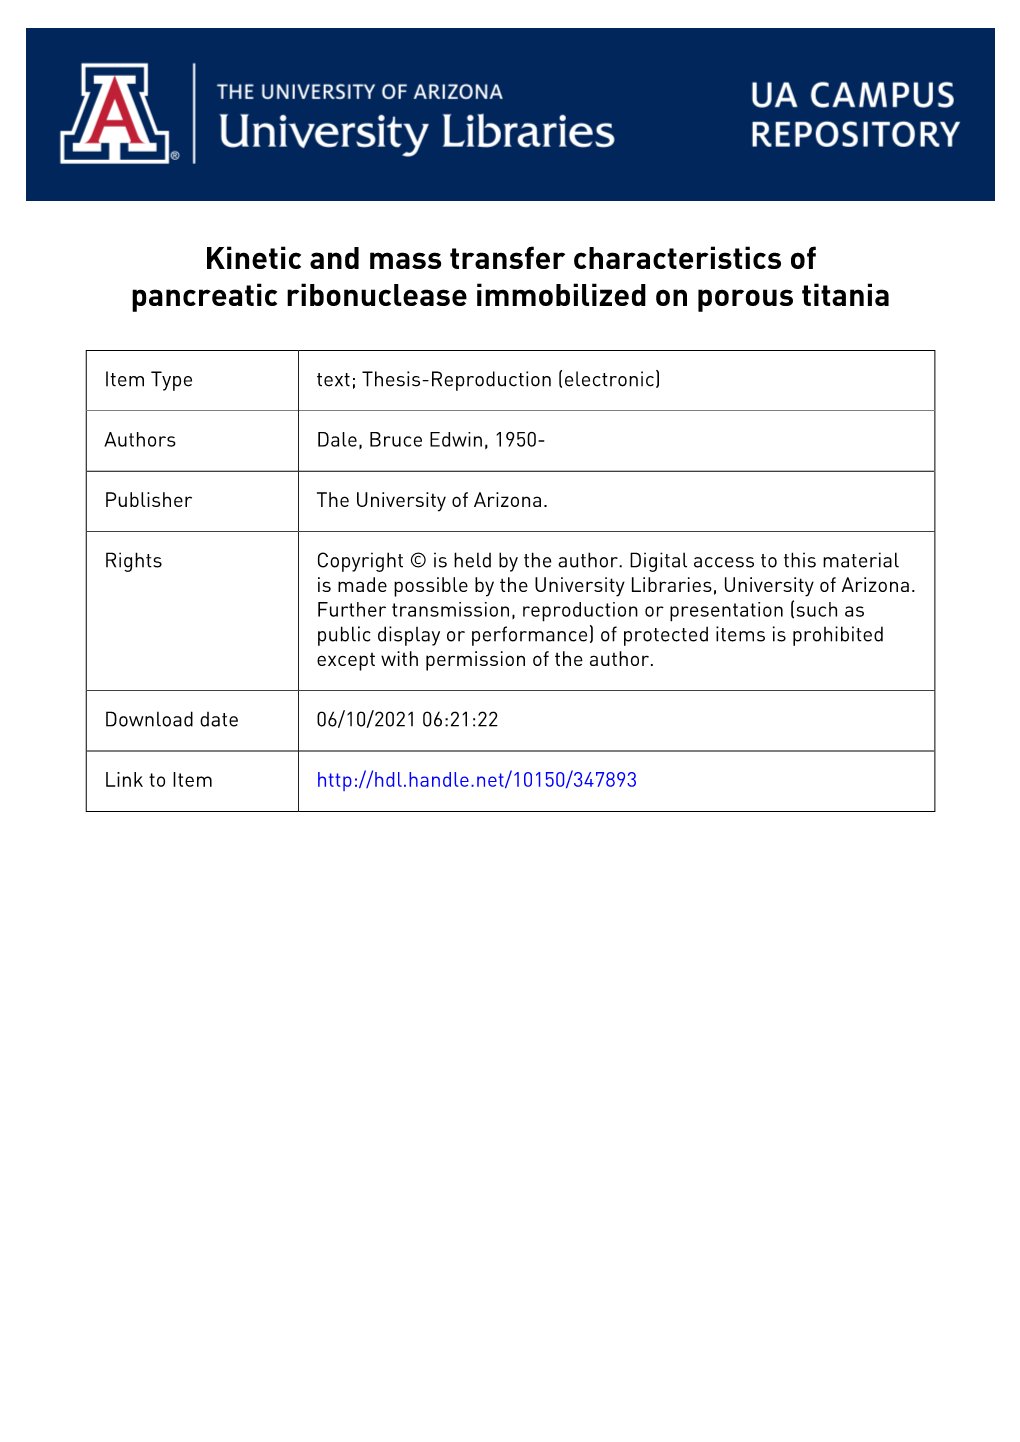 Kinetic and Mass Transfer Characteristics of Pancreatic Ribonuclease Immobilized on Porous Titania